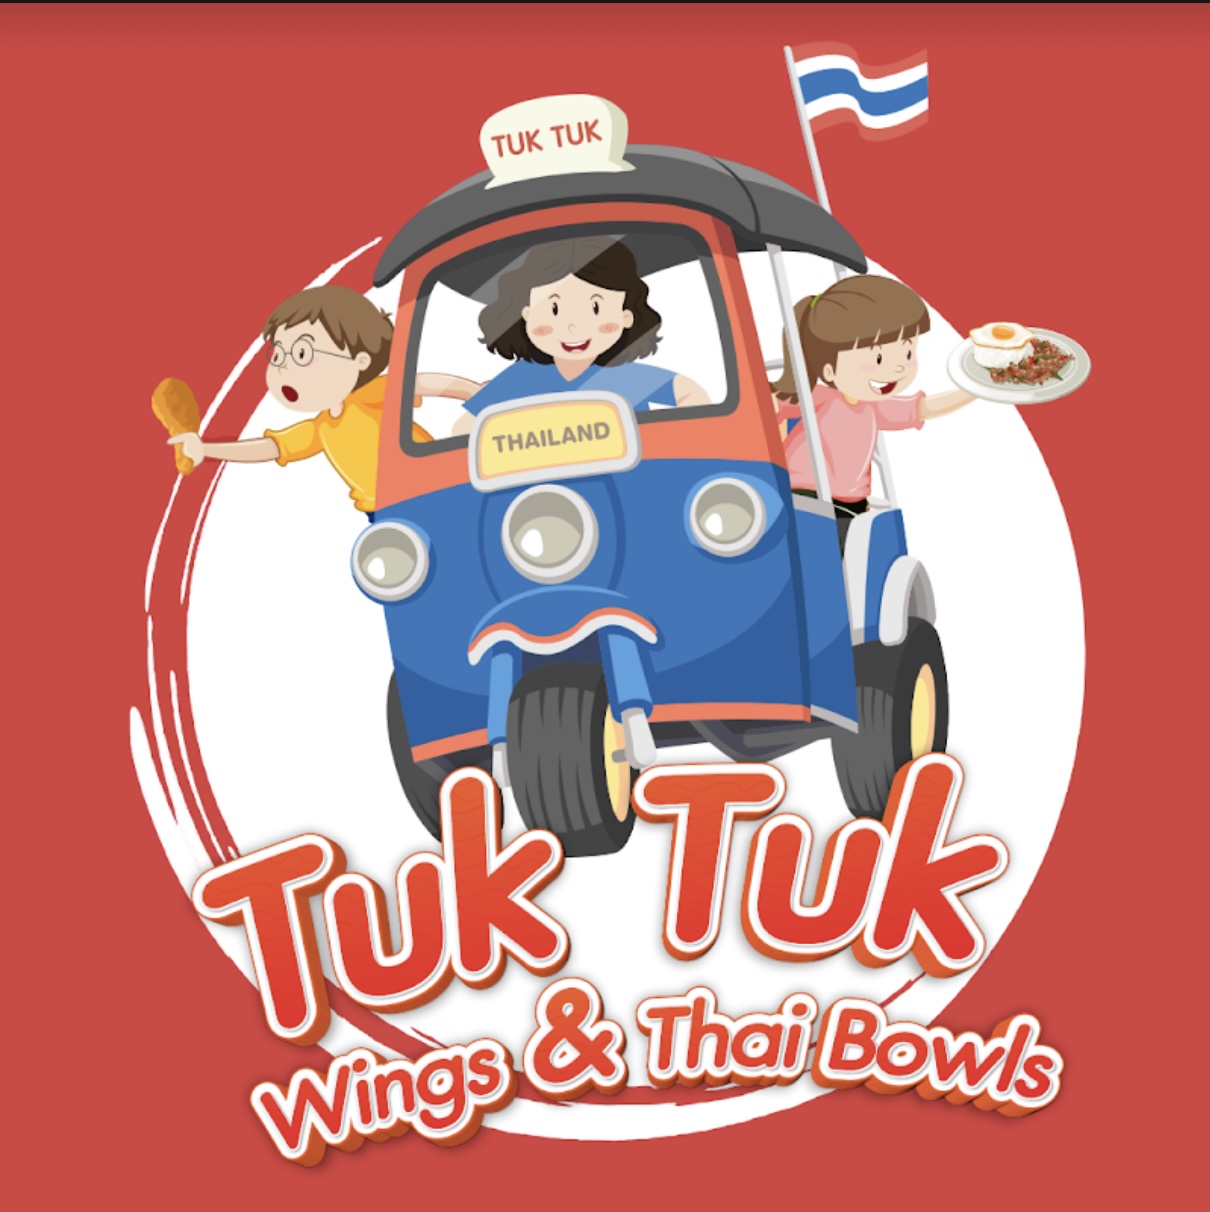 Tuk Tuk Wings & Thai Bowls